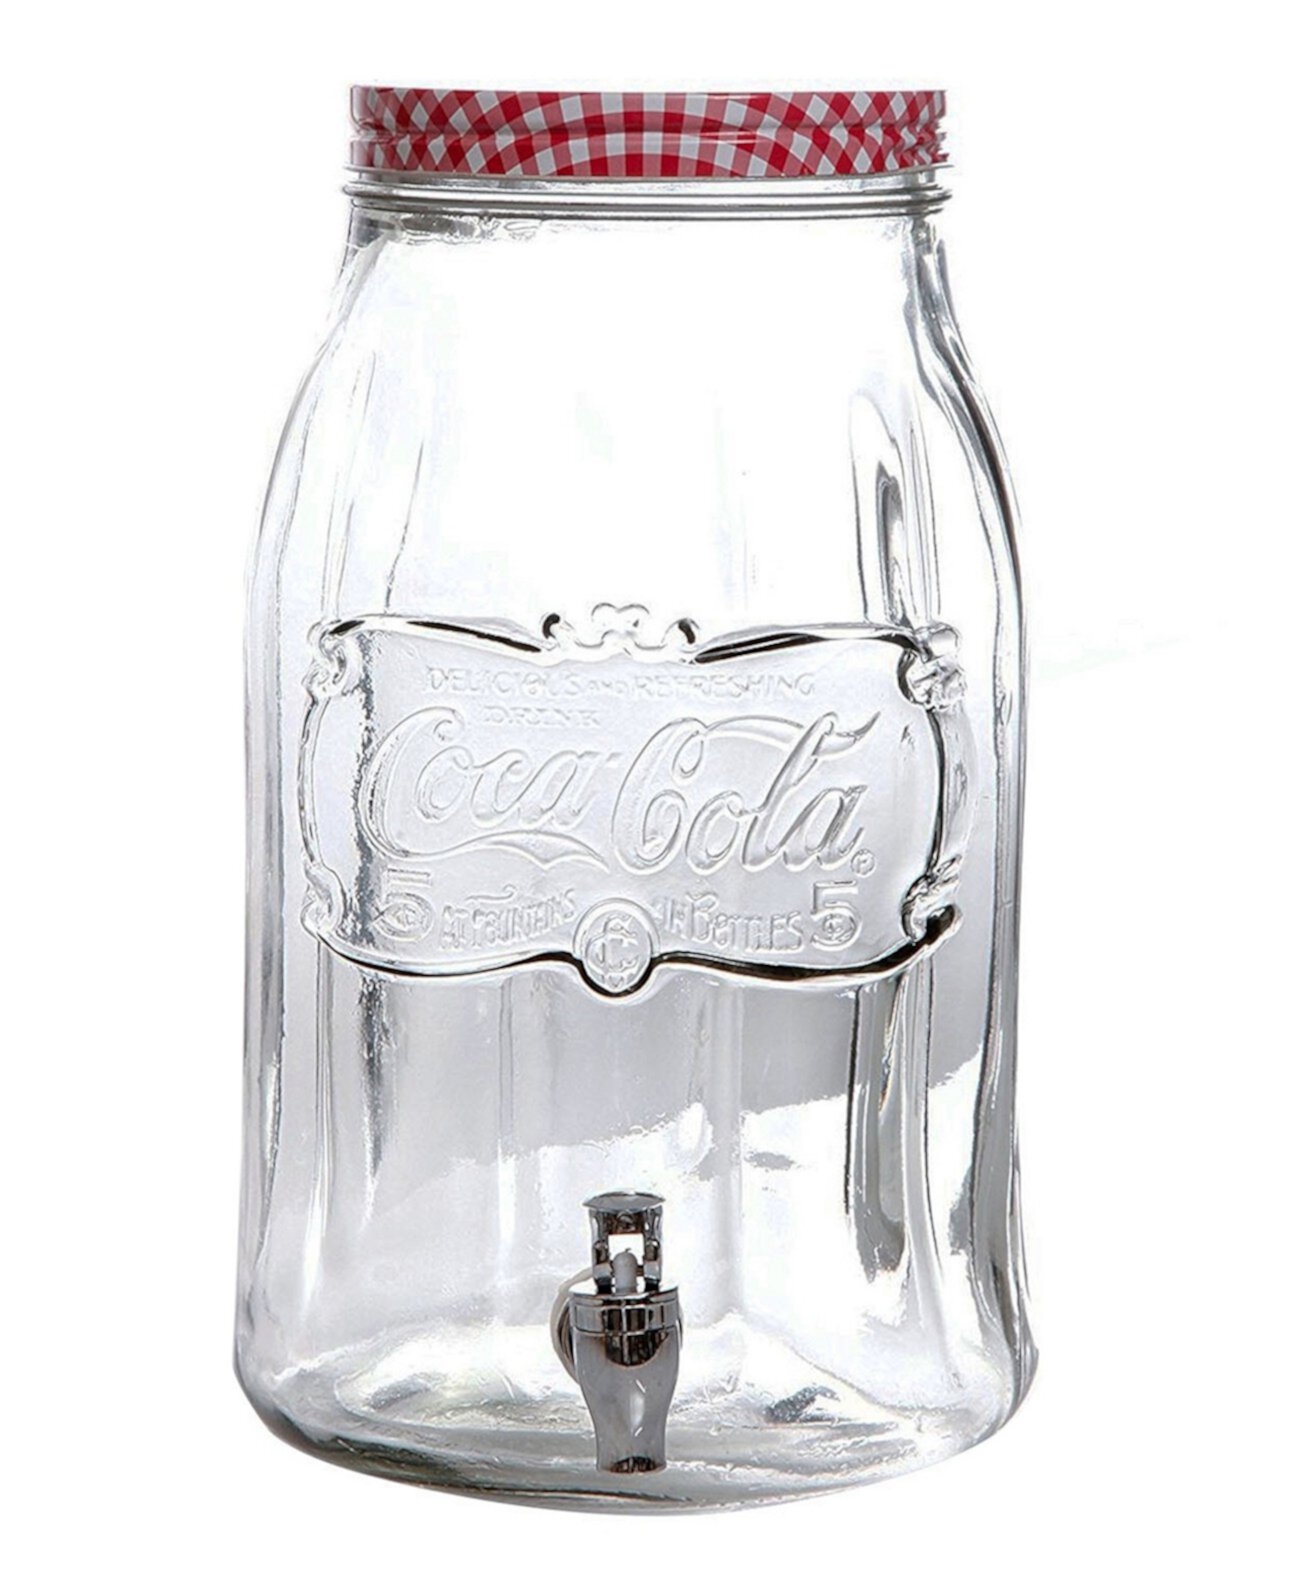 Диспенсер для напитков Mason на 2 галлона Coca-Cola Country Classic Laurie Gates